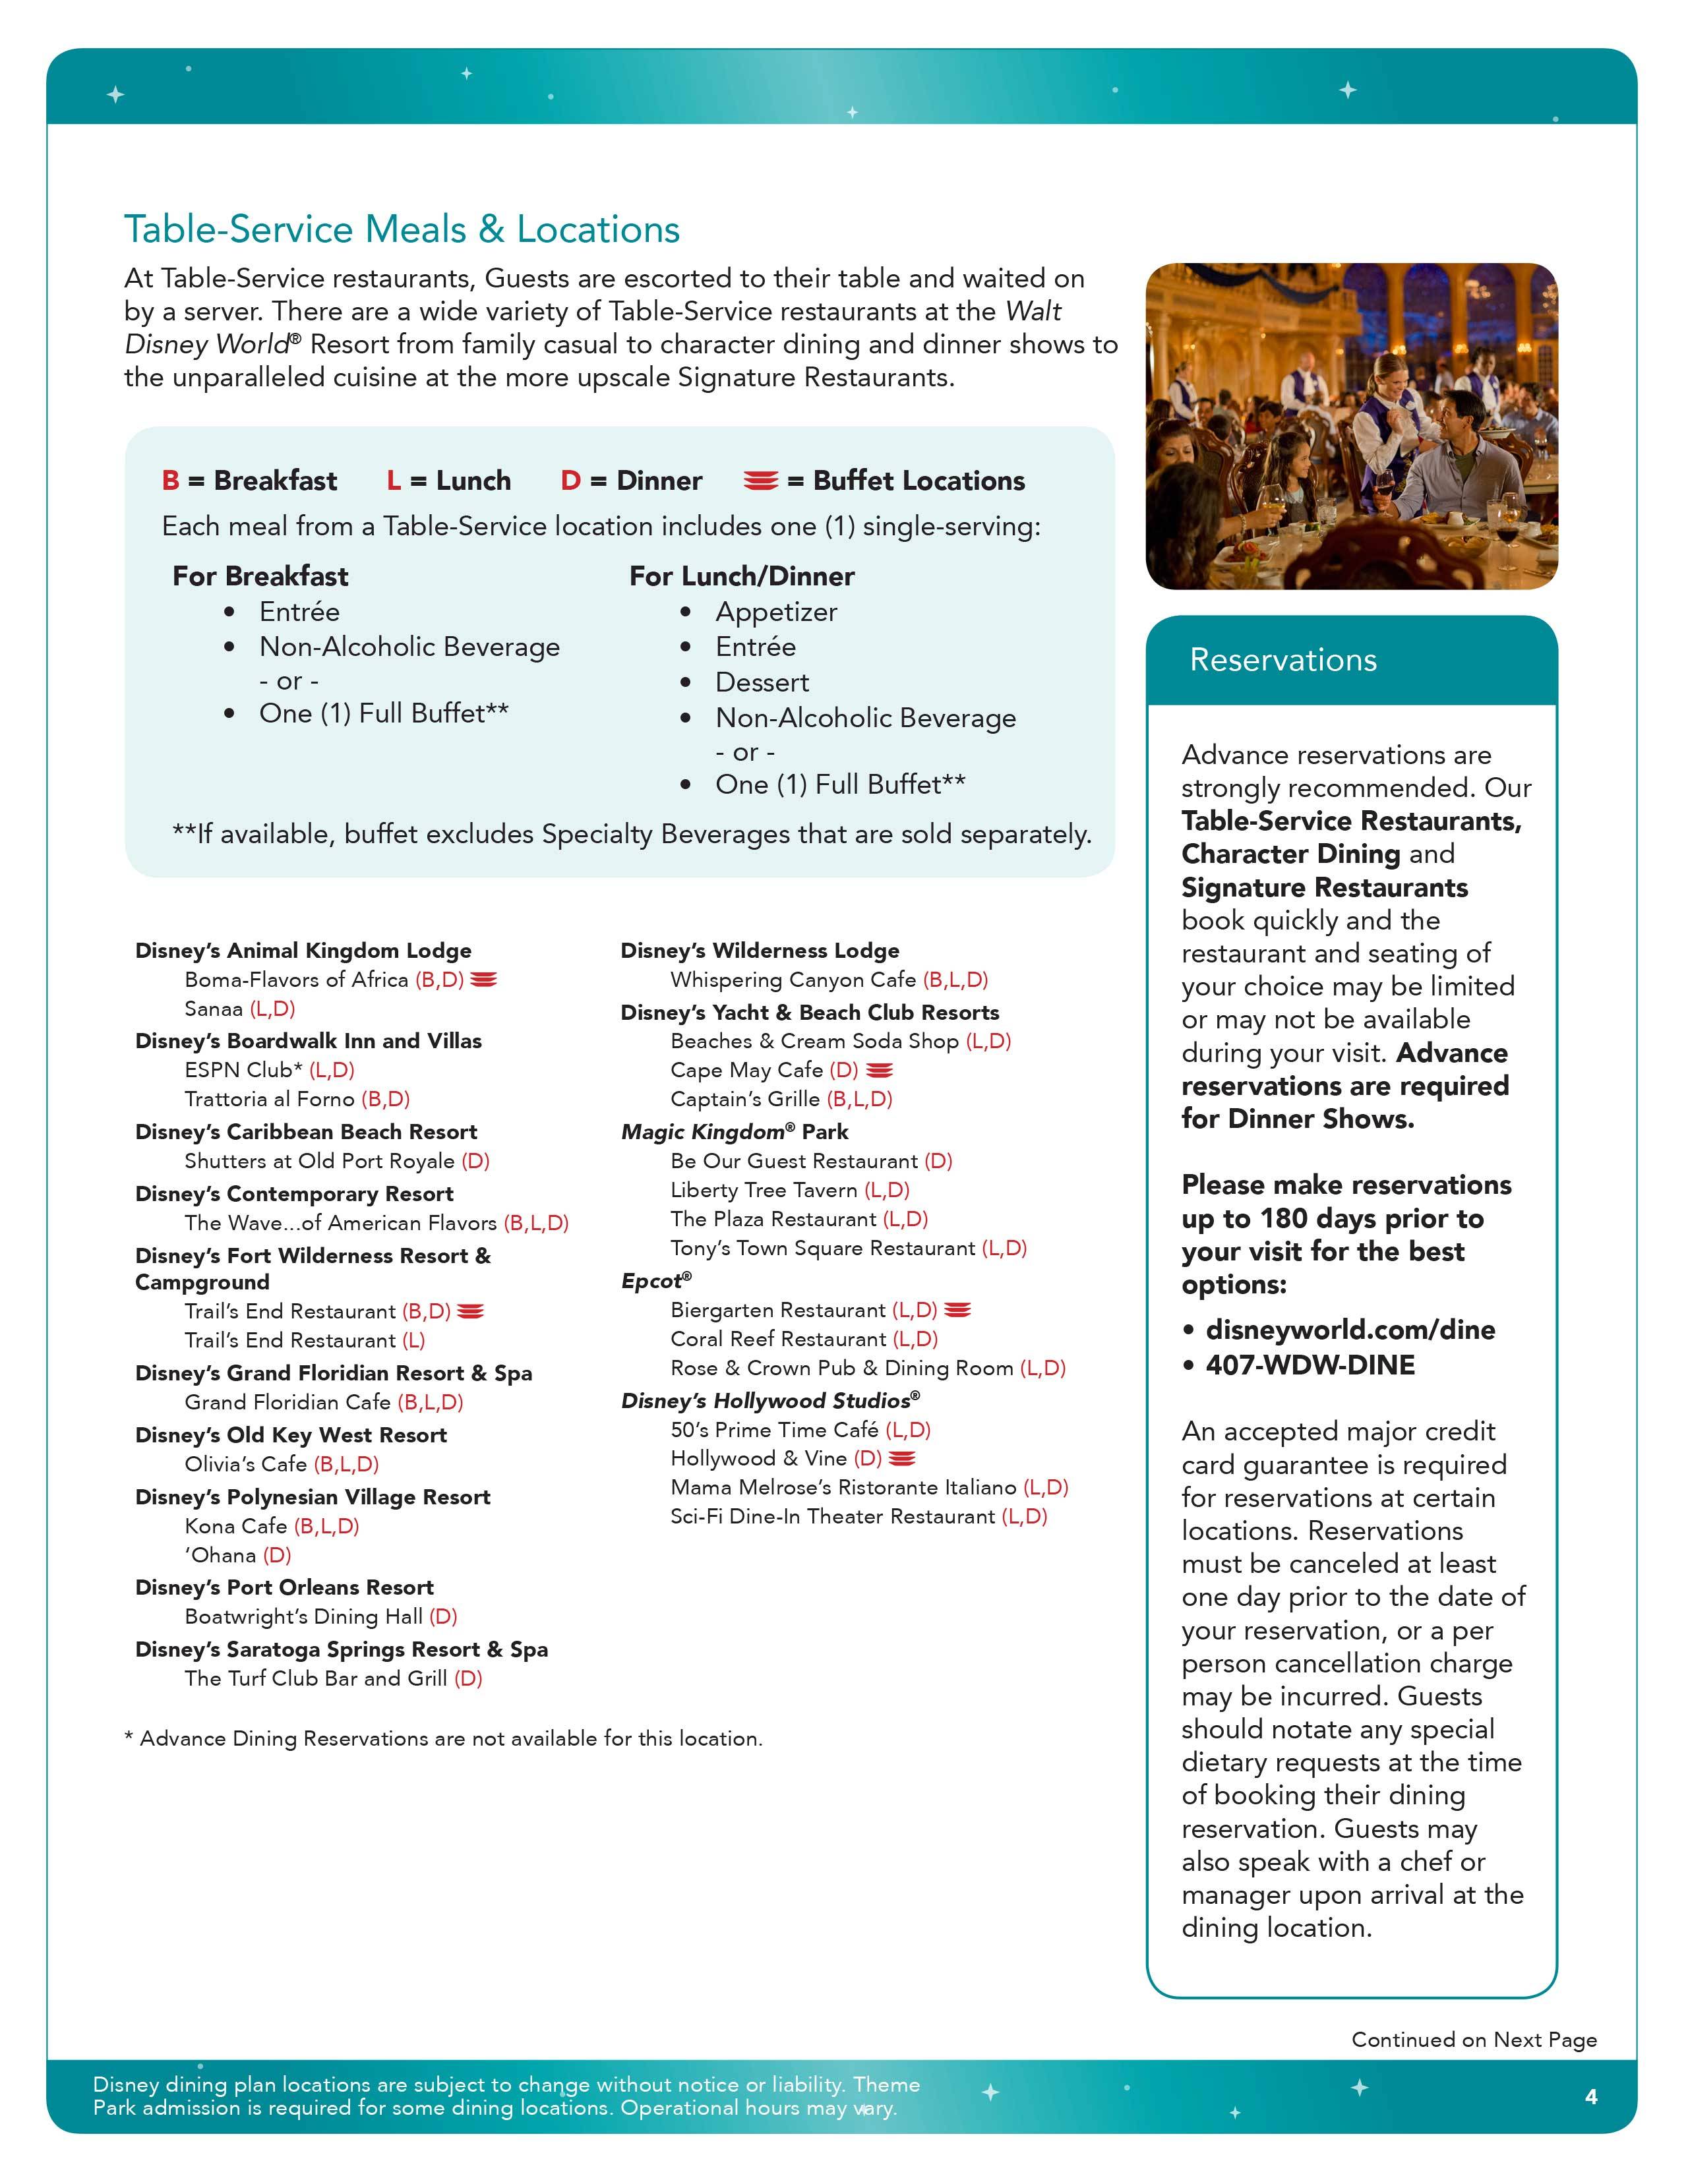 2016 Disney Platinum Dining Plan brochure - Page 9